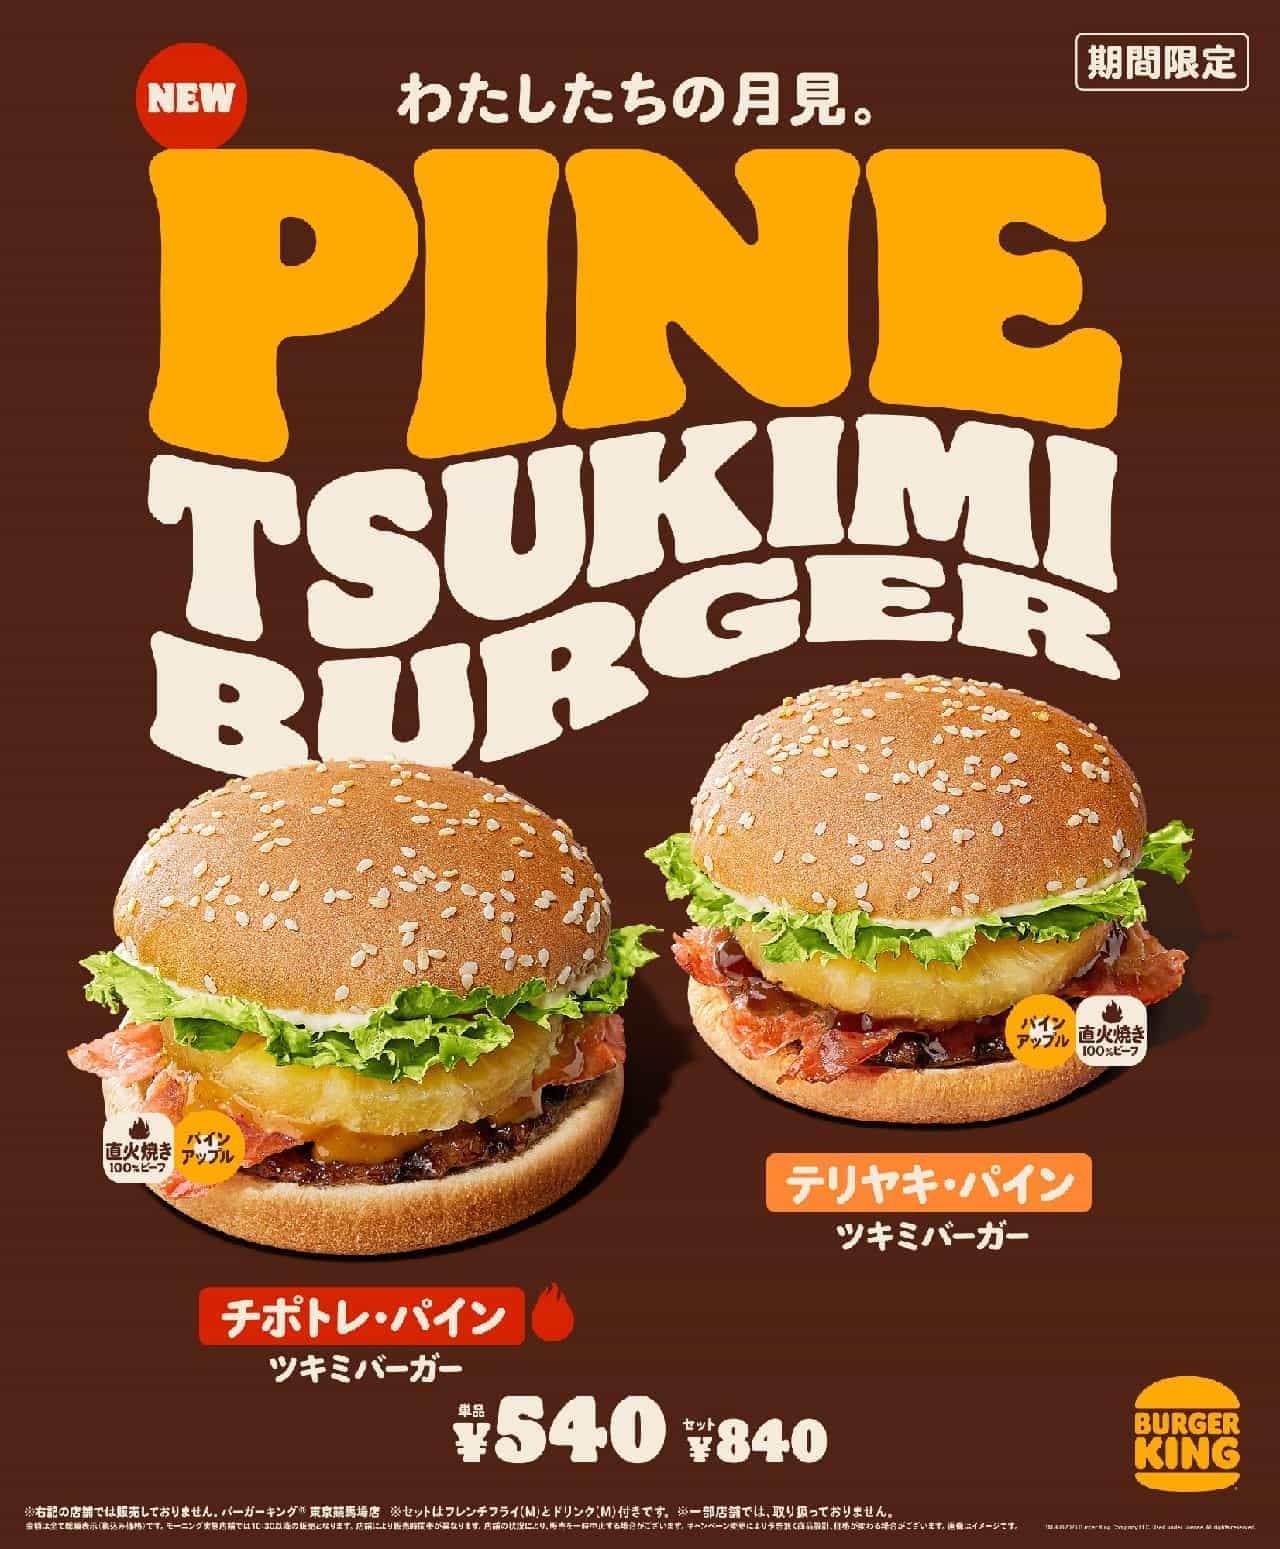 Burger King "Chipotle Pineapple Tsukimi Burger" and "Teriyaki Pineapple Tsukimi Burger